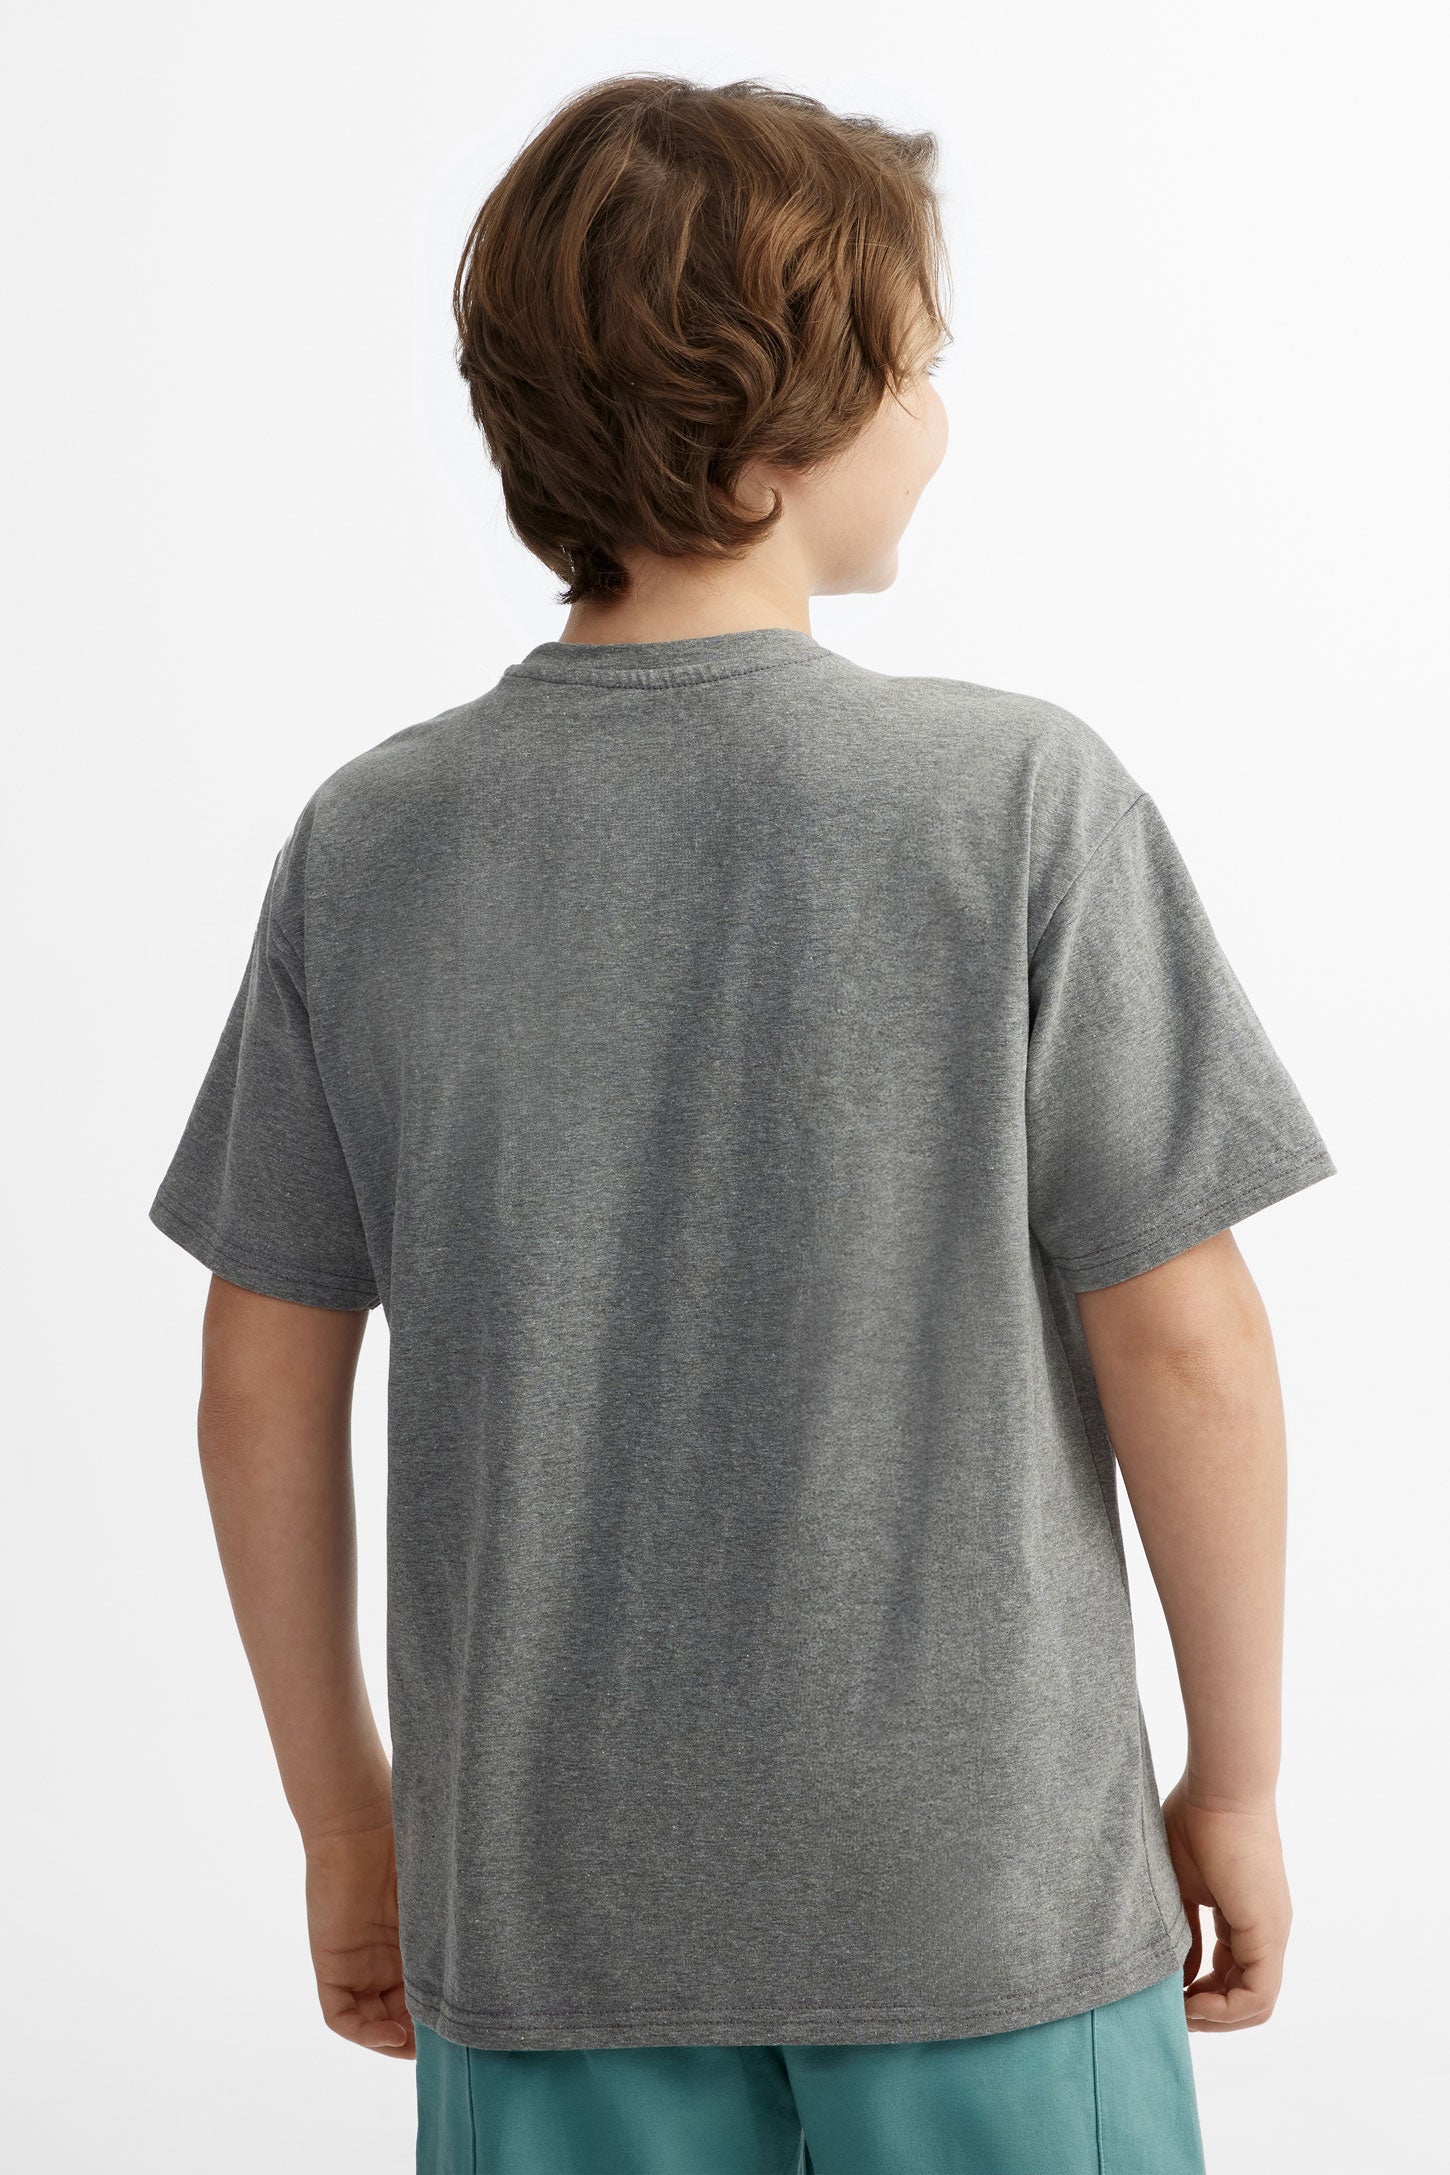 T-shirt imprimé en coton, 2/25$ - Ado garçon && GRIS MIXTE